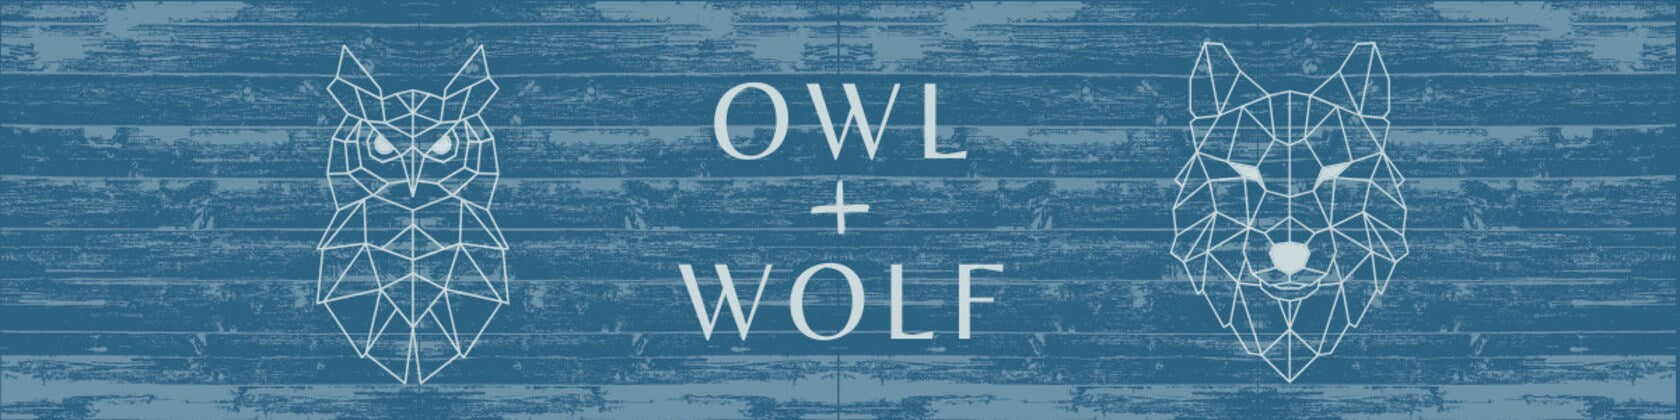 Owl + Wolf